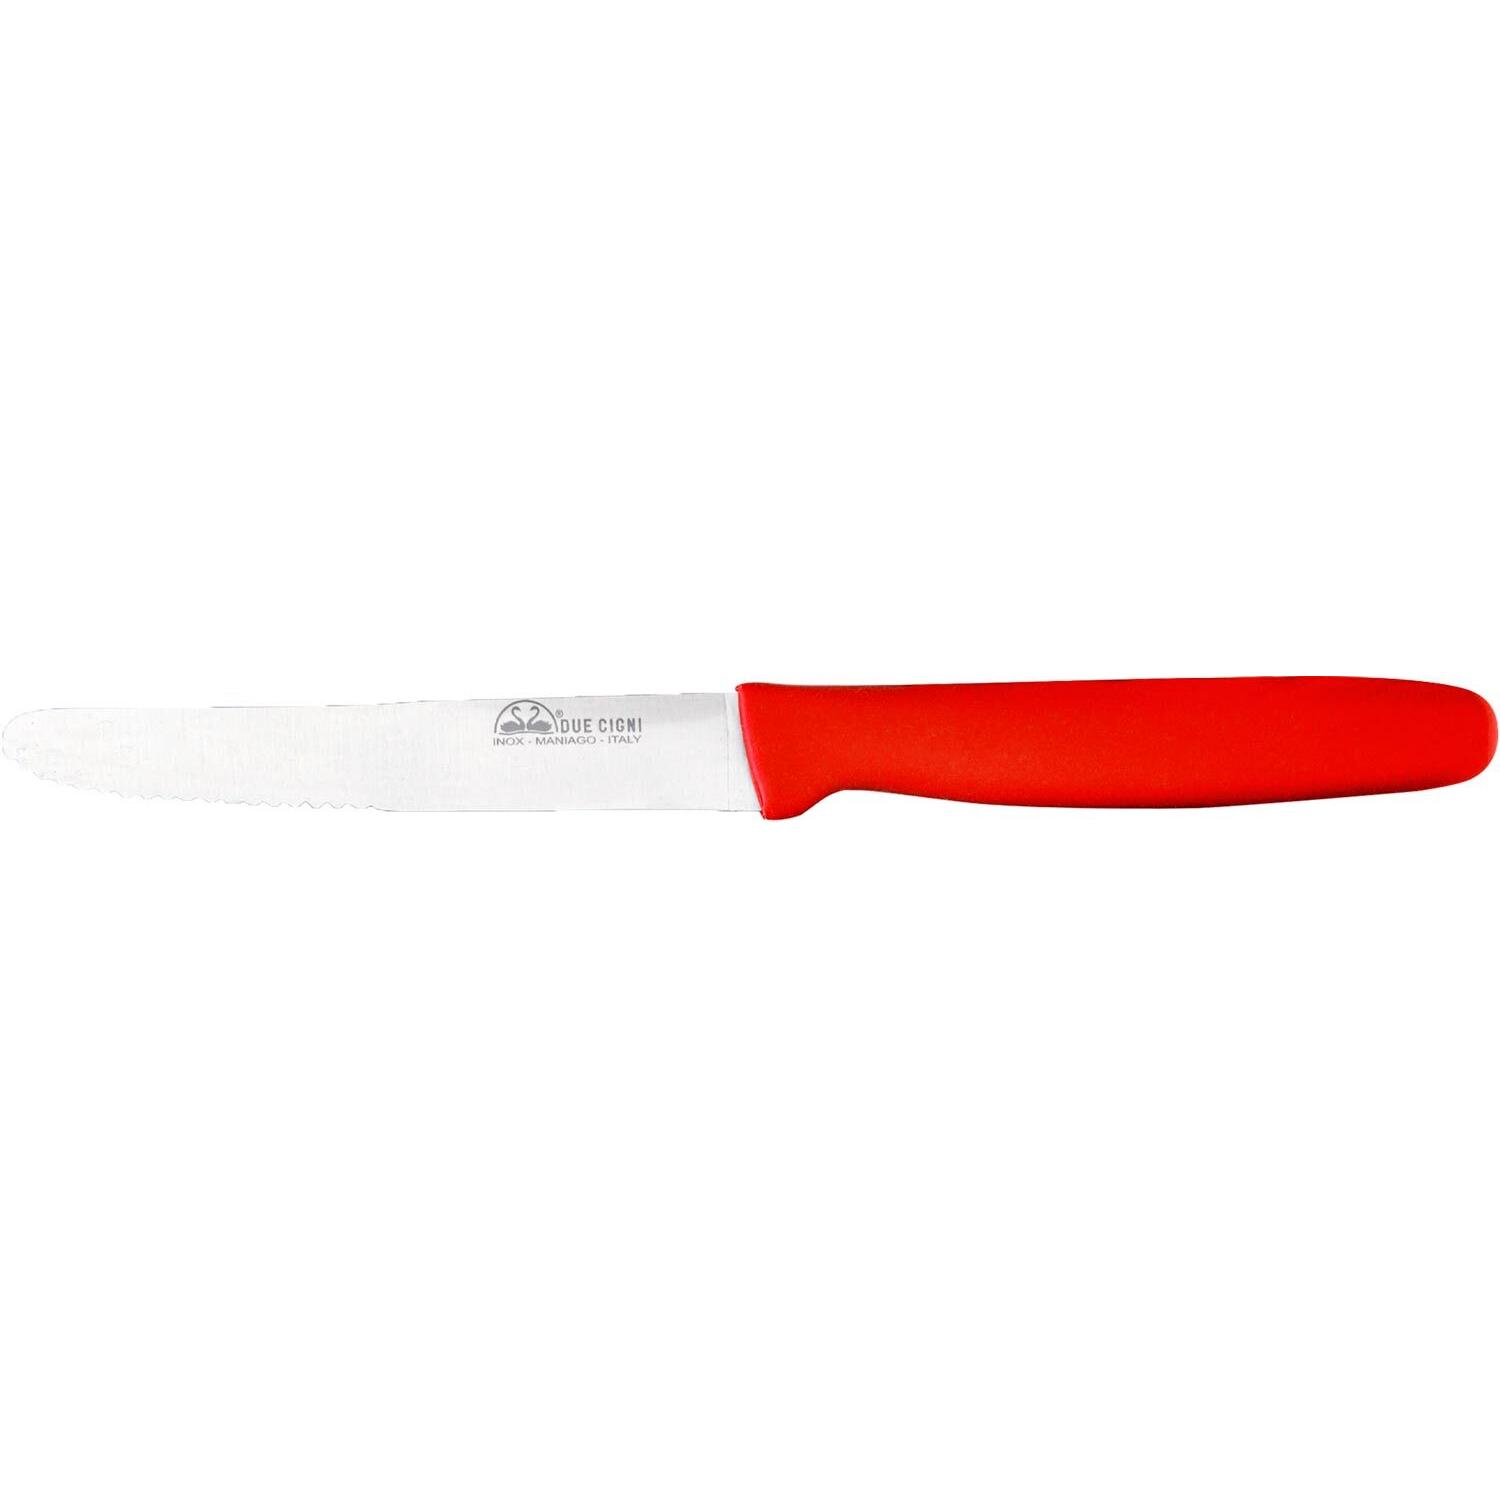 Нож кухонный Due Cigni Table Combo 110 мм. Цвет - красный 2C 711/11 DR 1904.00.70